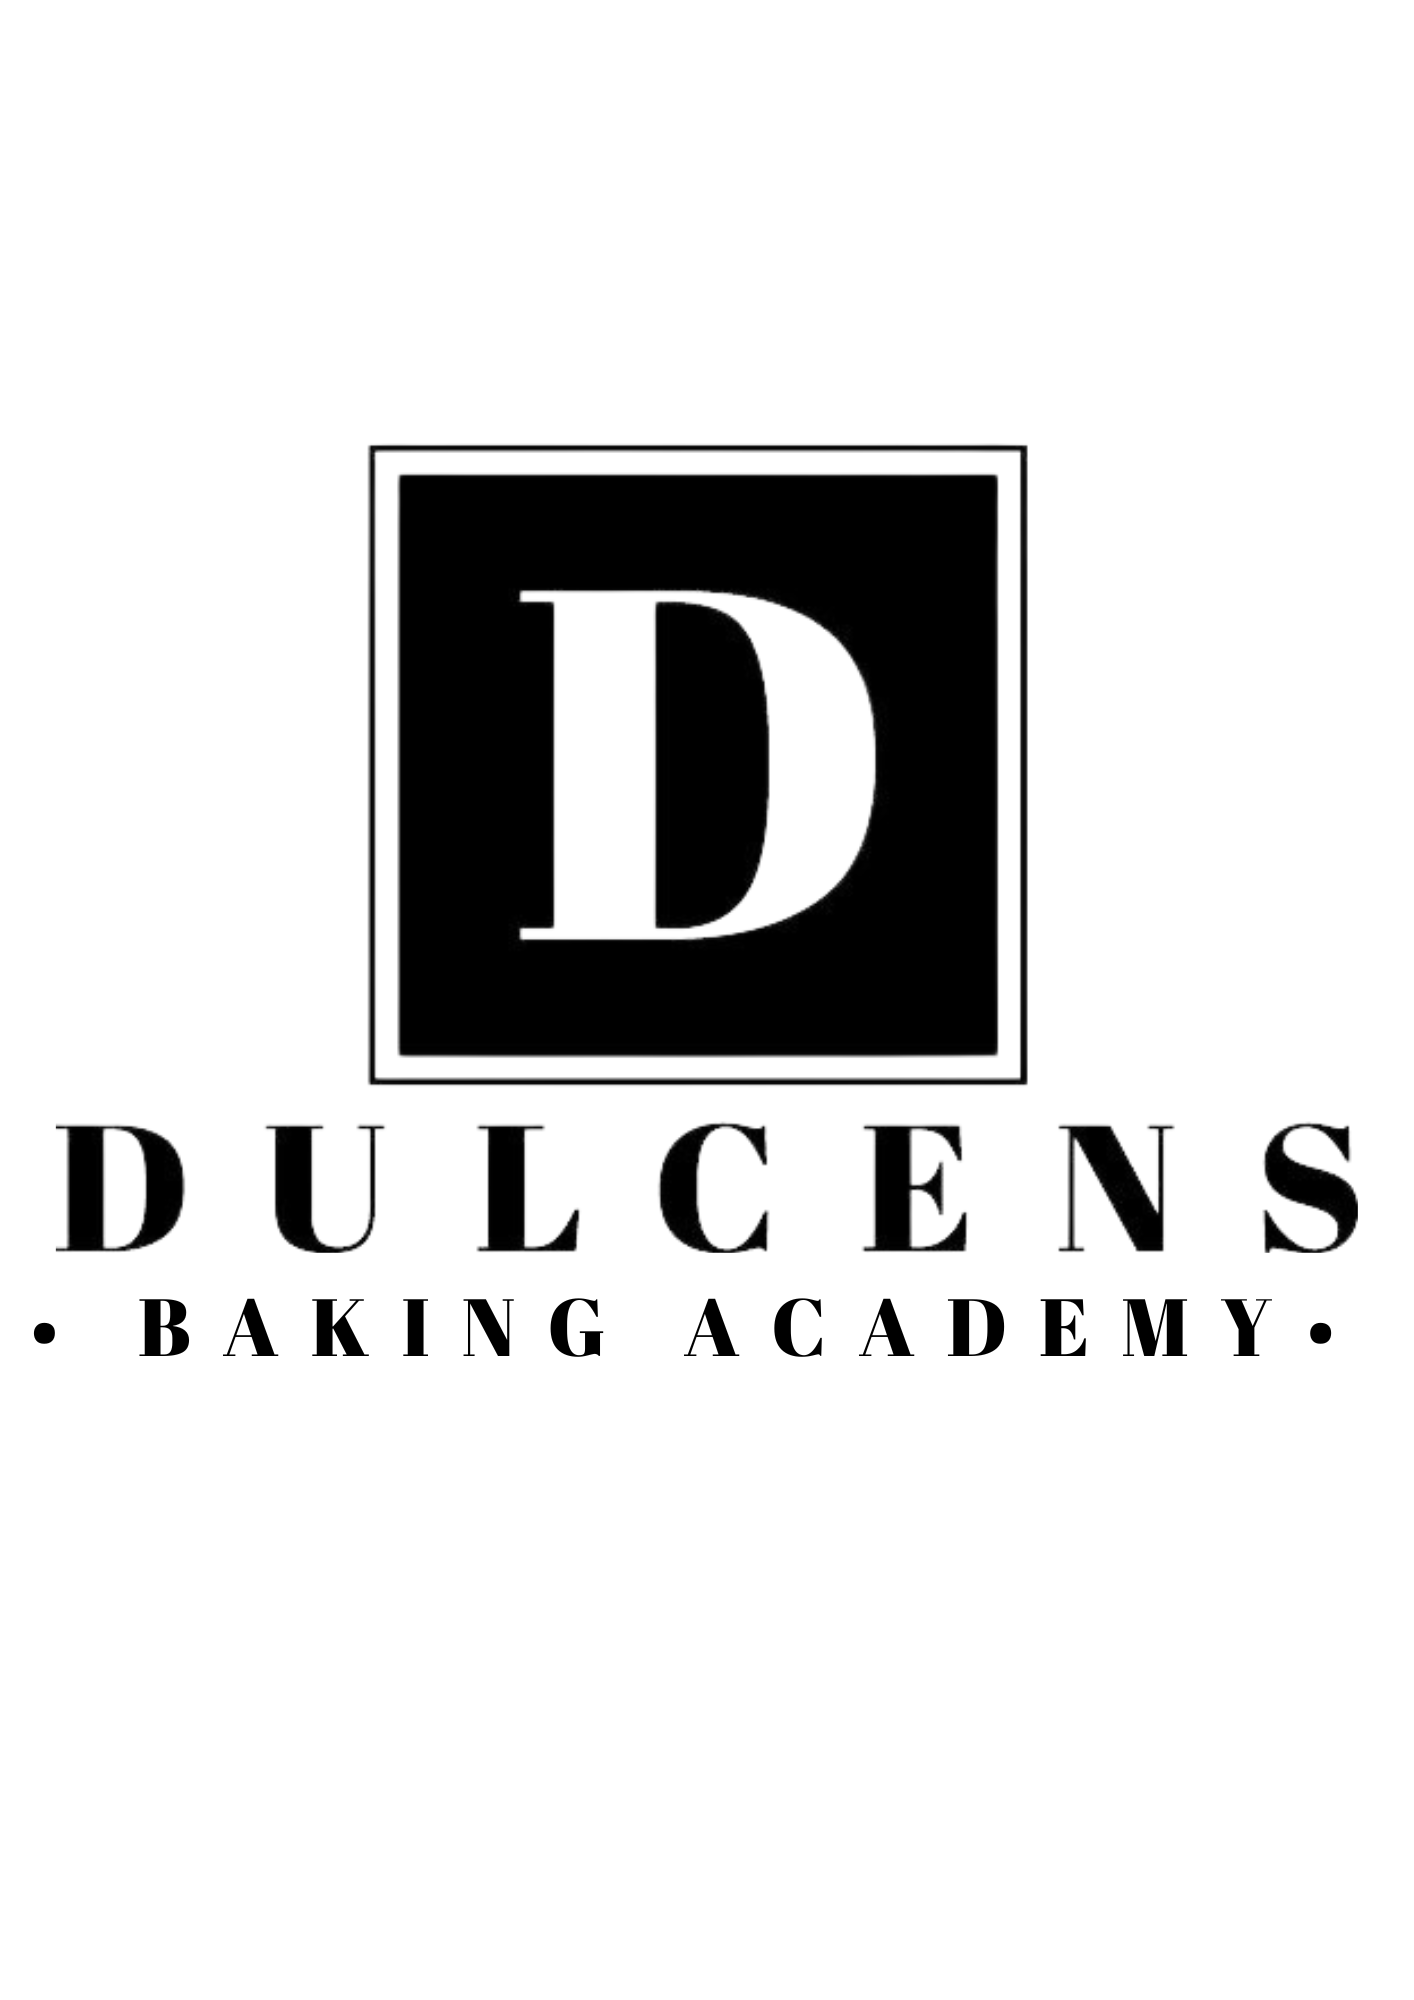 Dulcens Baking Academy